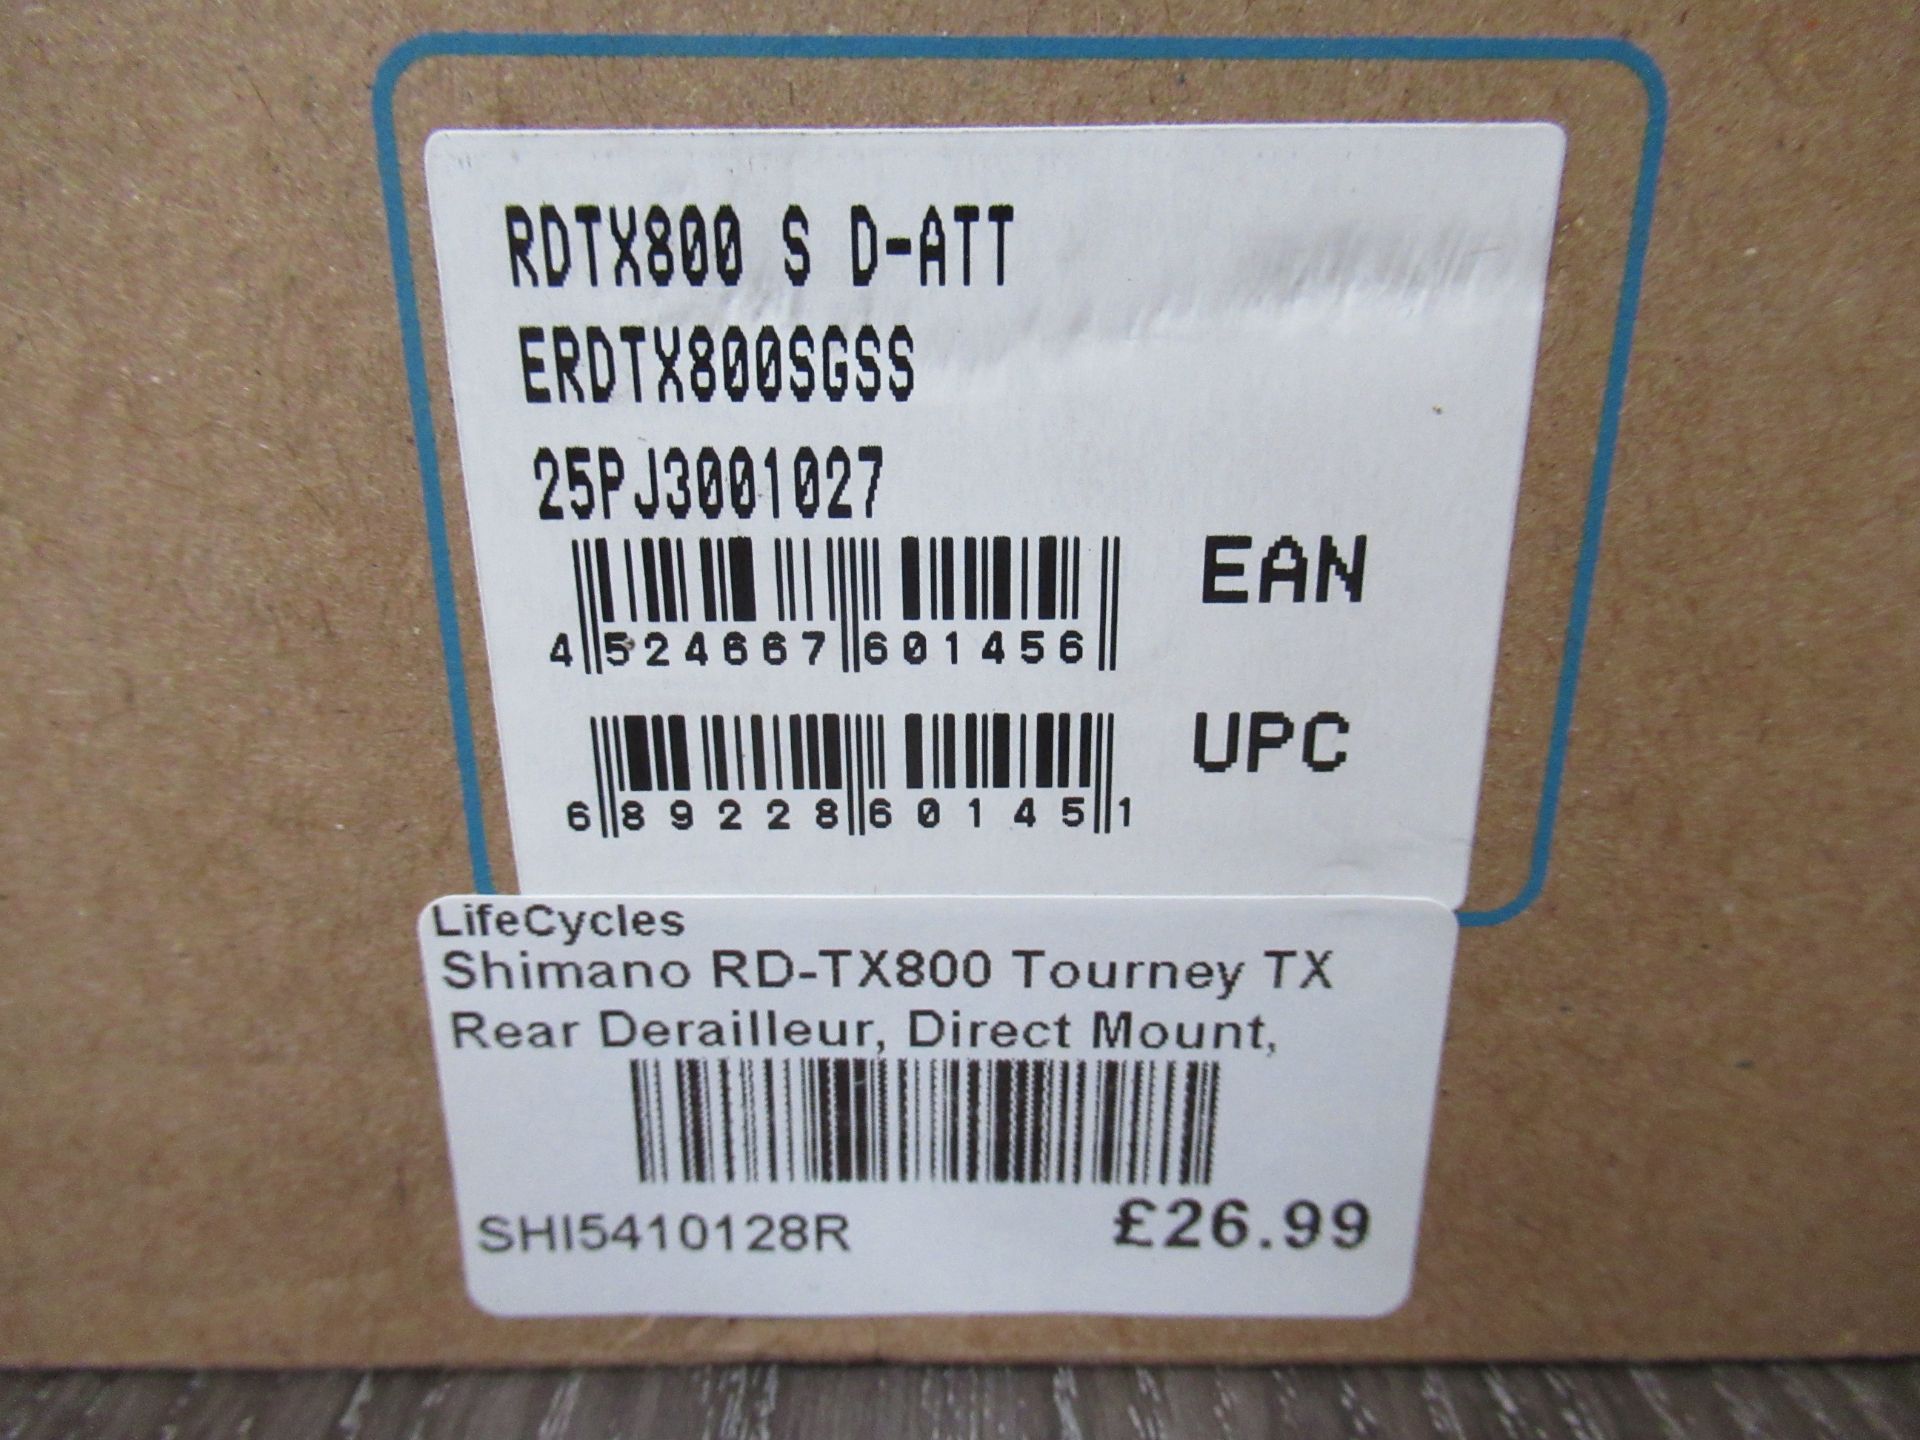 5 x Shimano RD-TX800 Tourney TX Rear Derailleurs (RRP£26.99 each) - Image 2 of 3